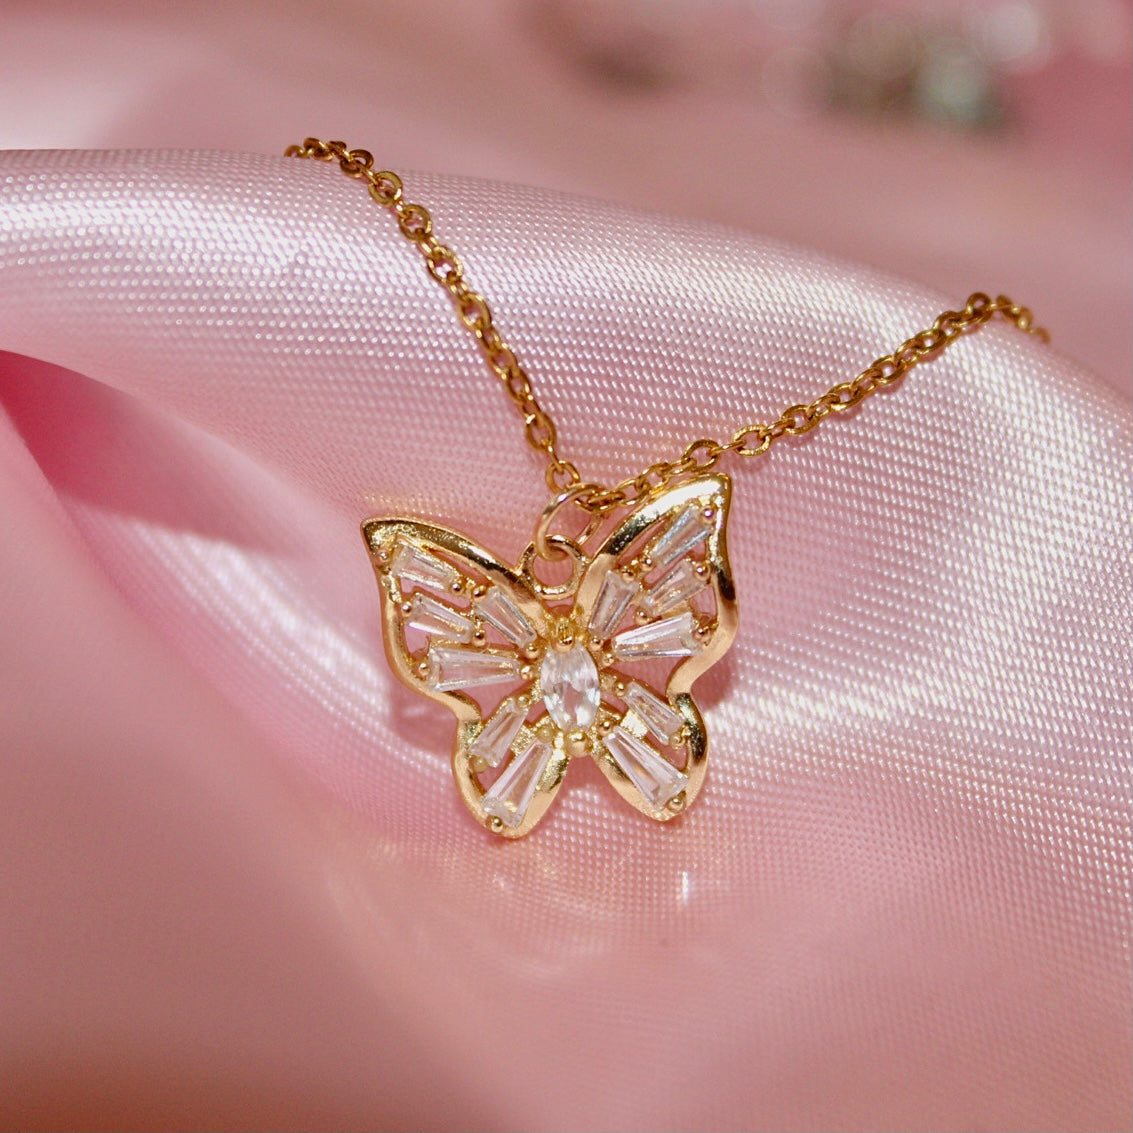 Baby butterfly necklace - Muna Jewelz